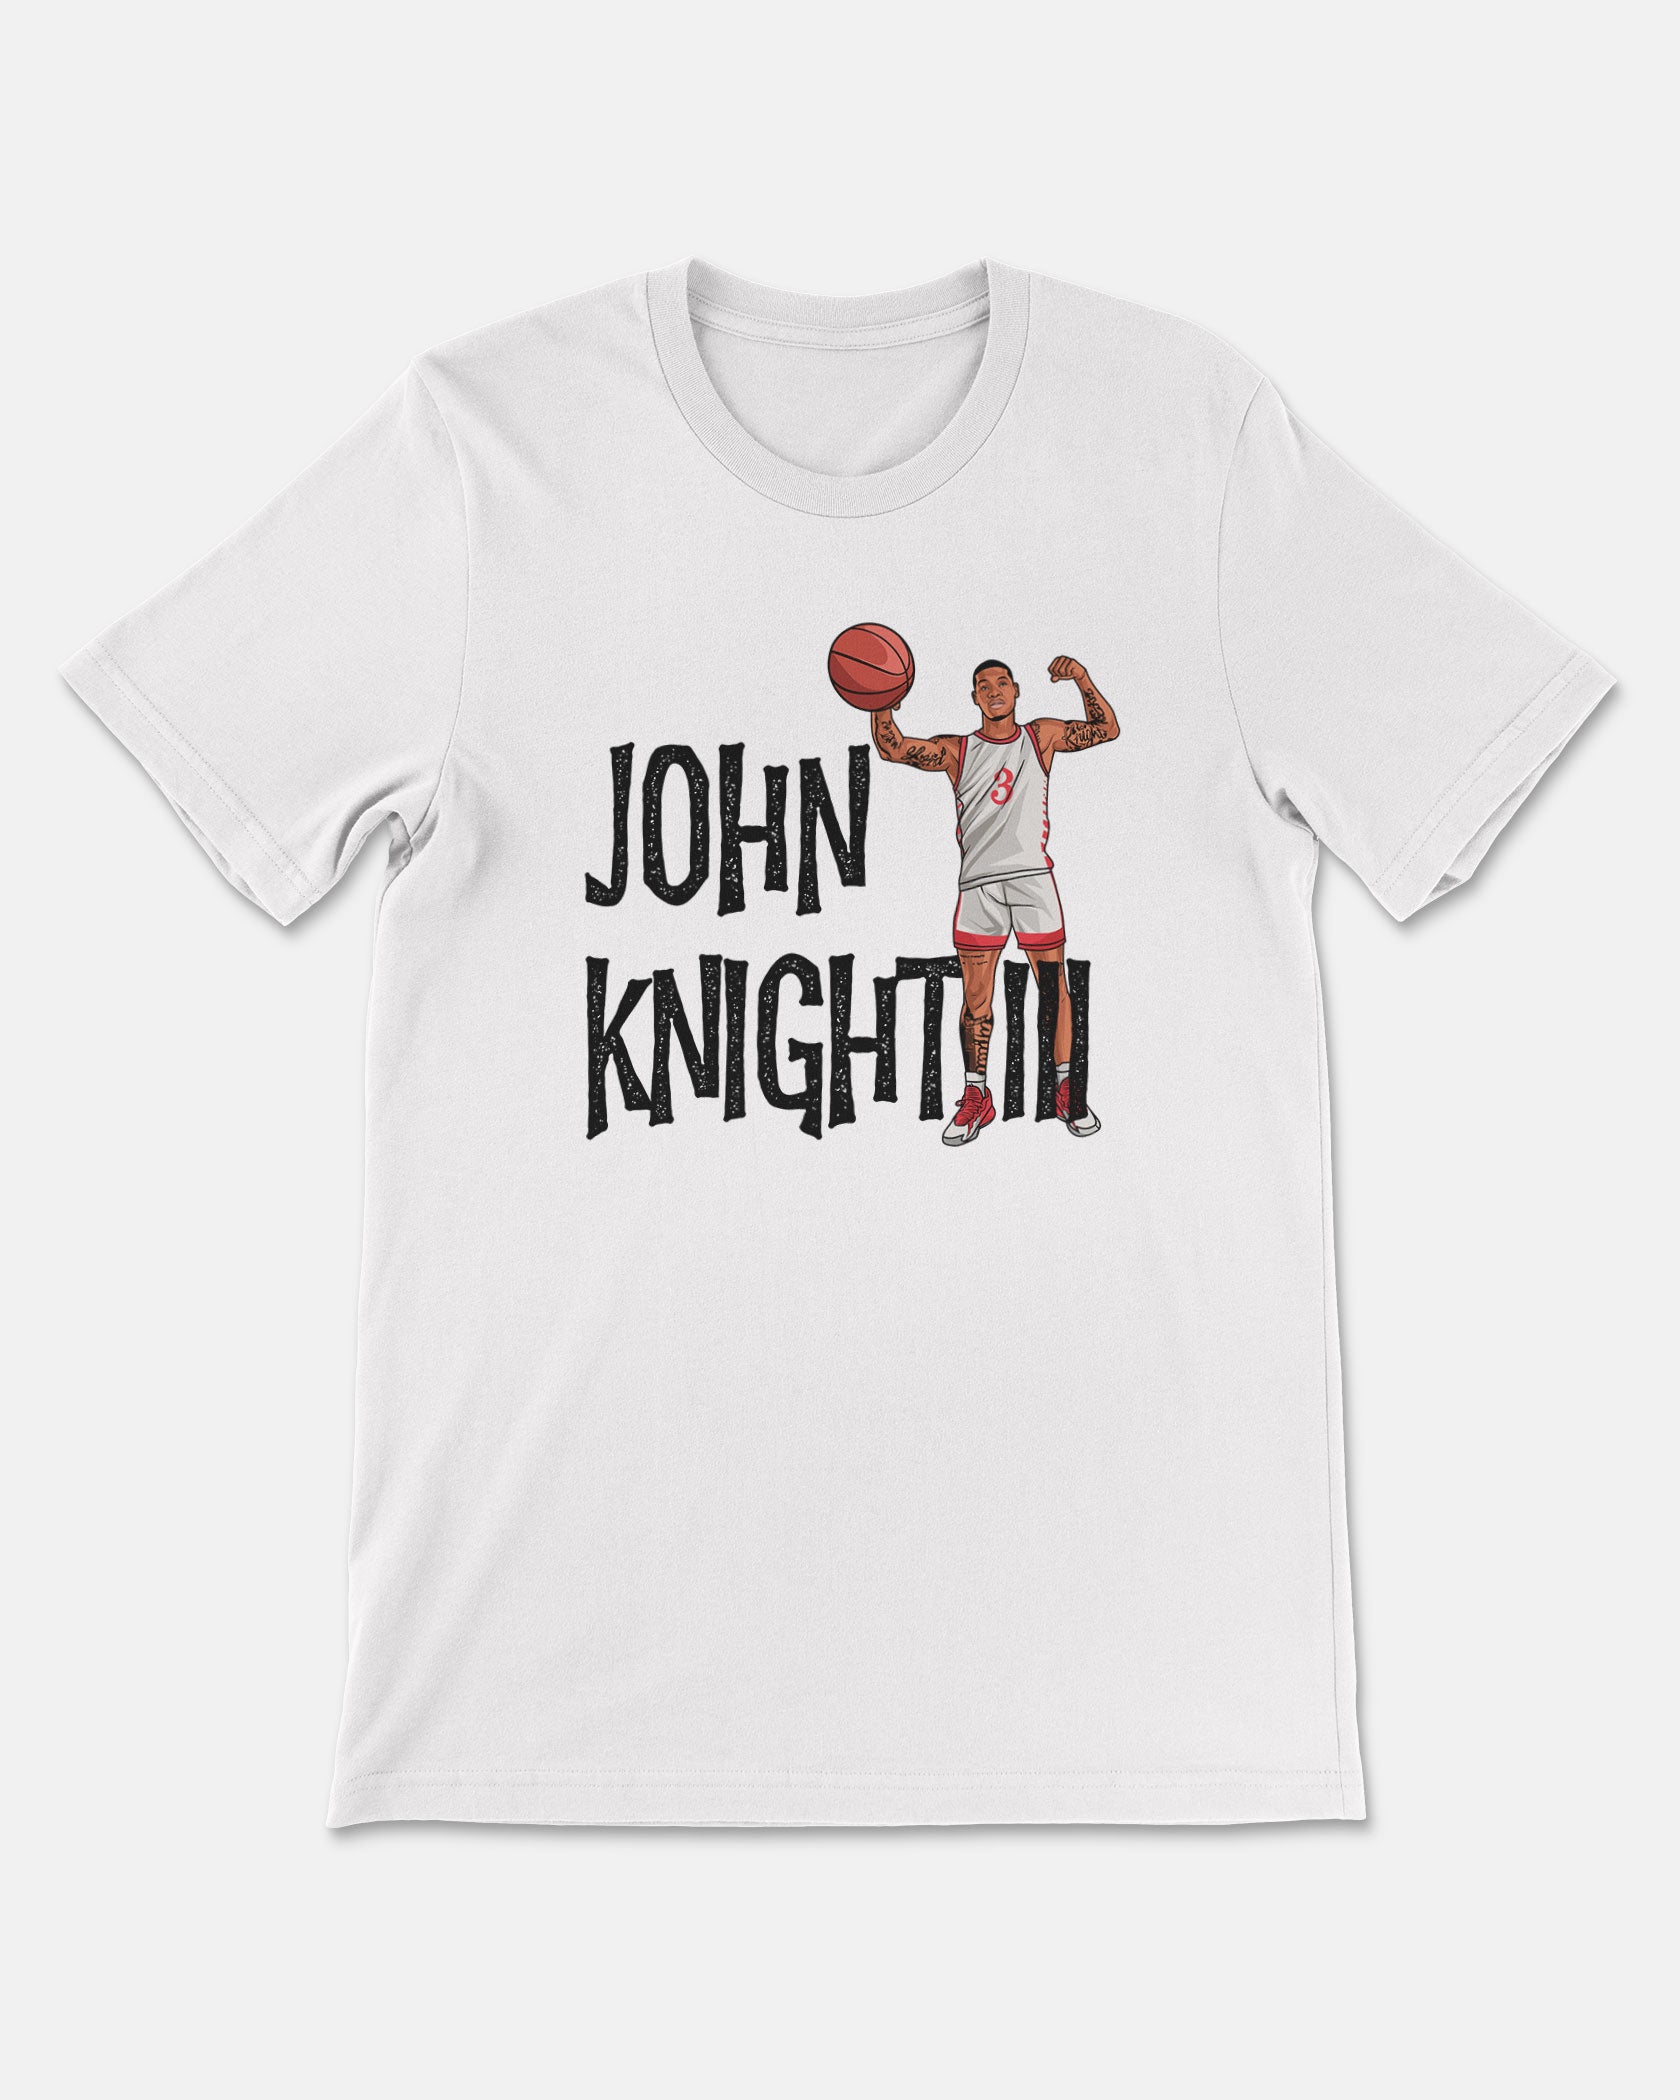 John Knight III Shirt 001